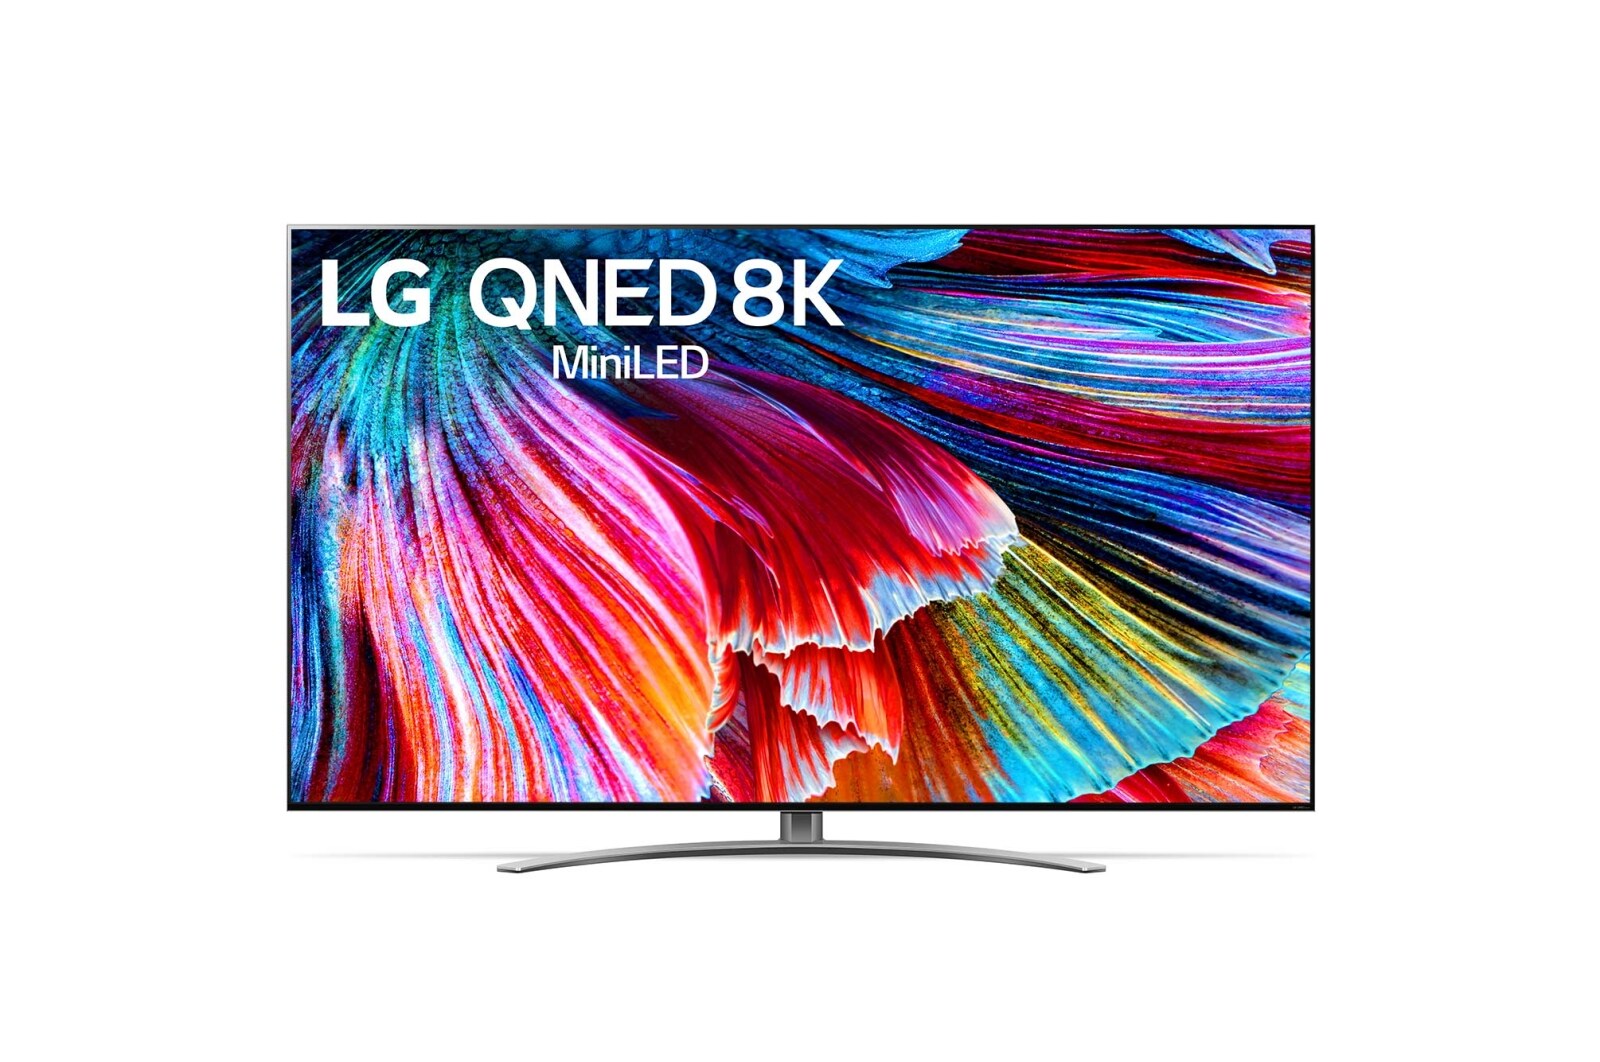 , H LG σηματοδοτεί την εξέλιξη των LCD τηλεοράσεων με τη νέα σειρά LG QNED996